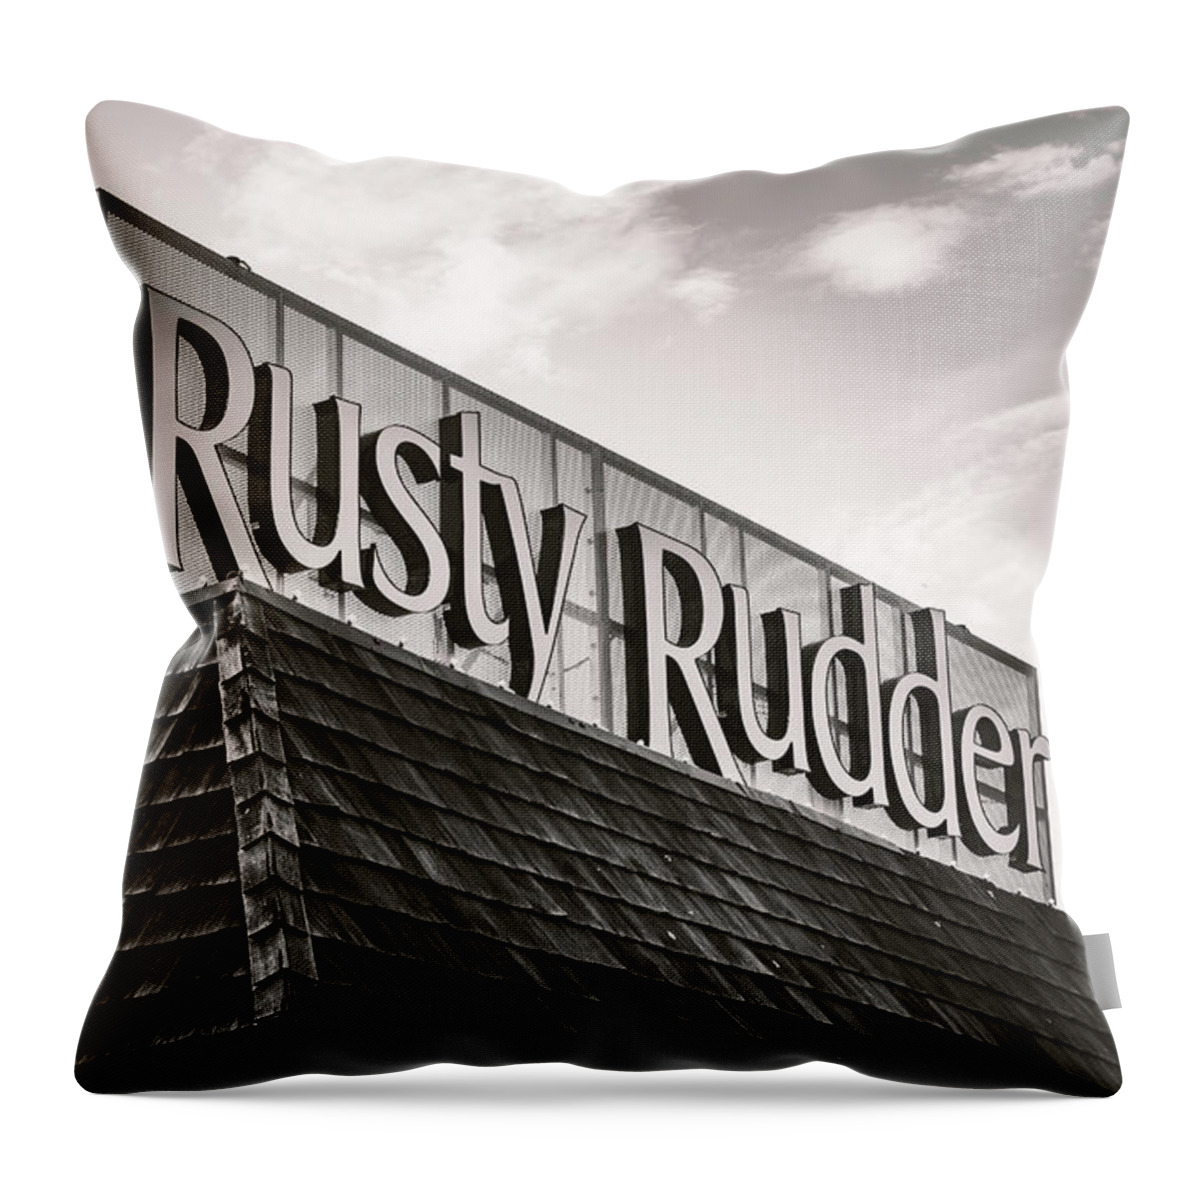 Rusty Throw Pillow featuring the photograph Rusty Rudder Sign by Jason Fink